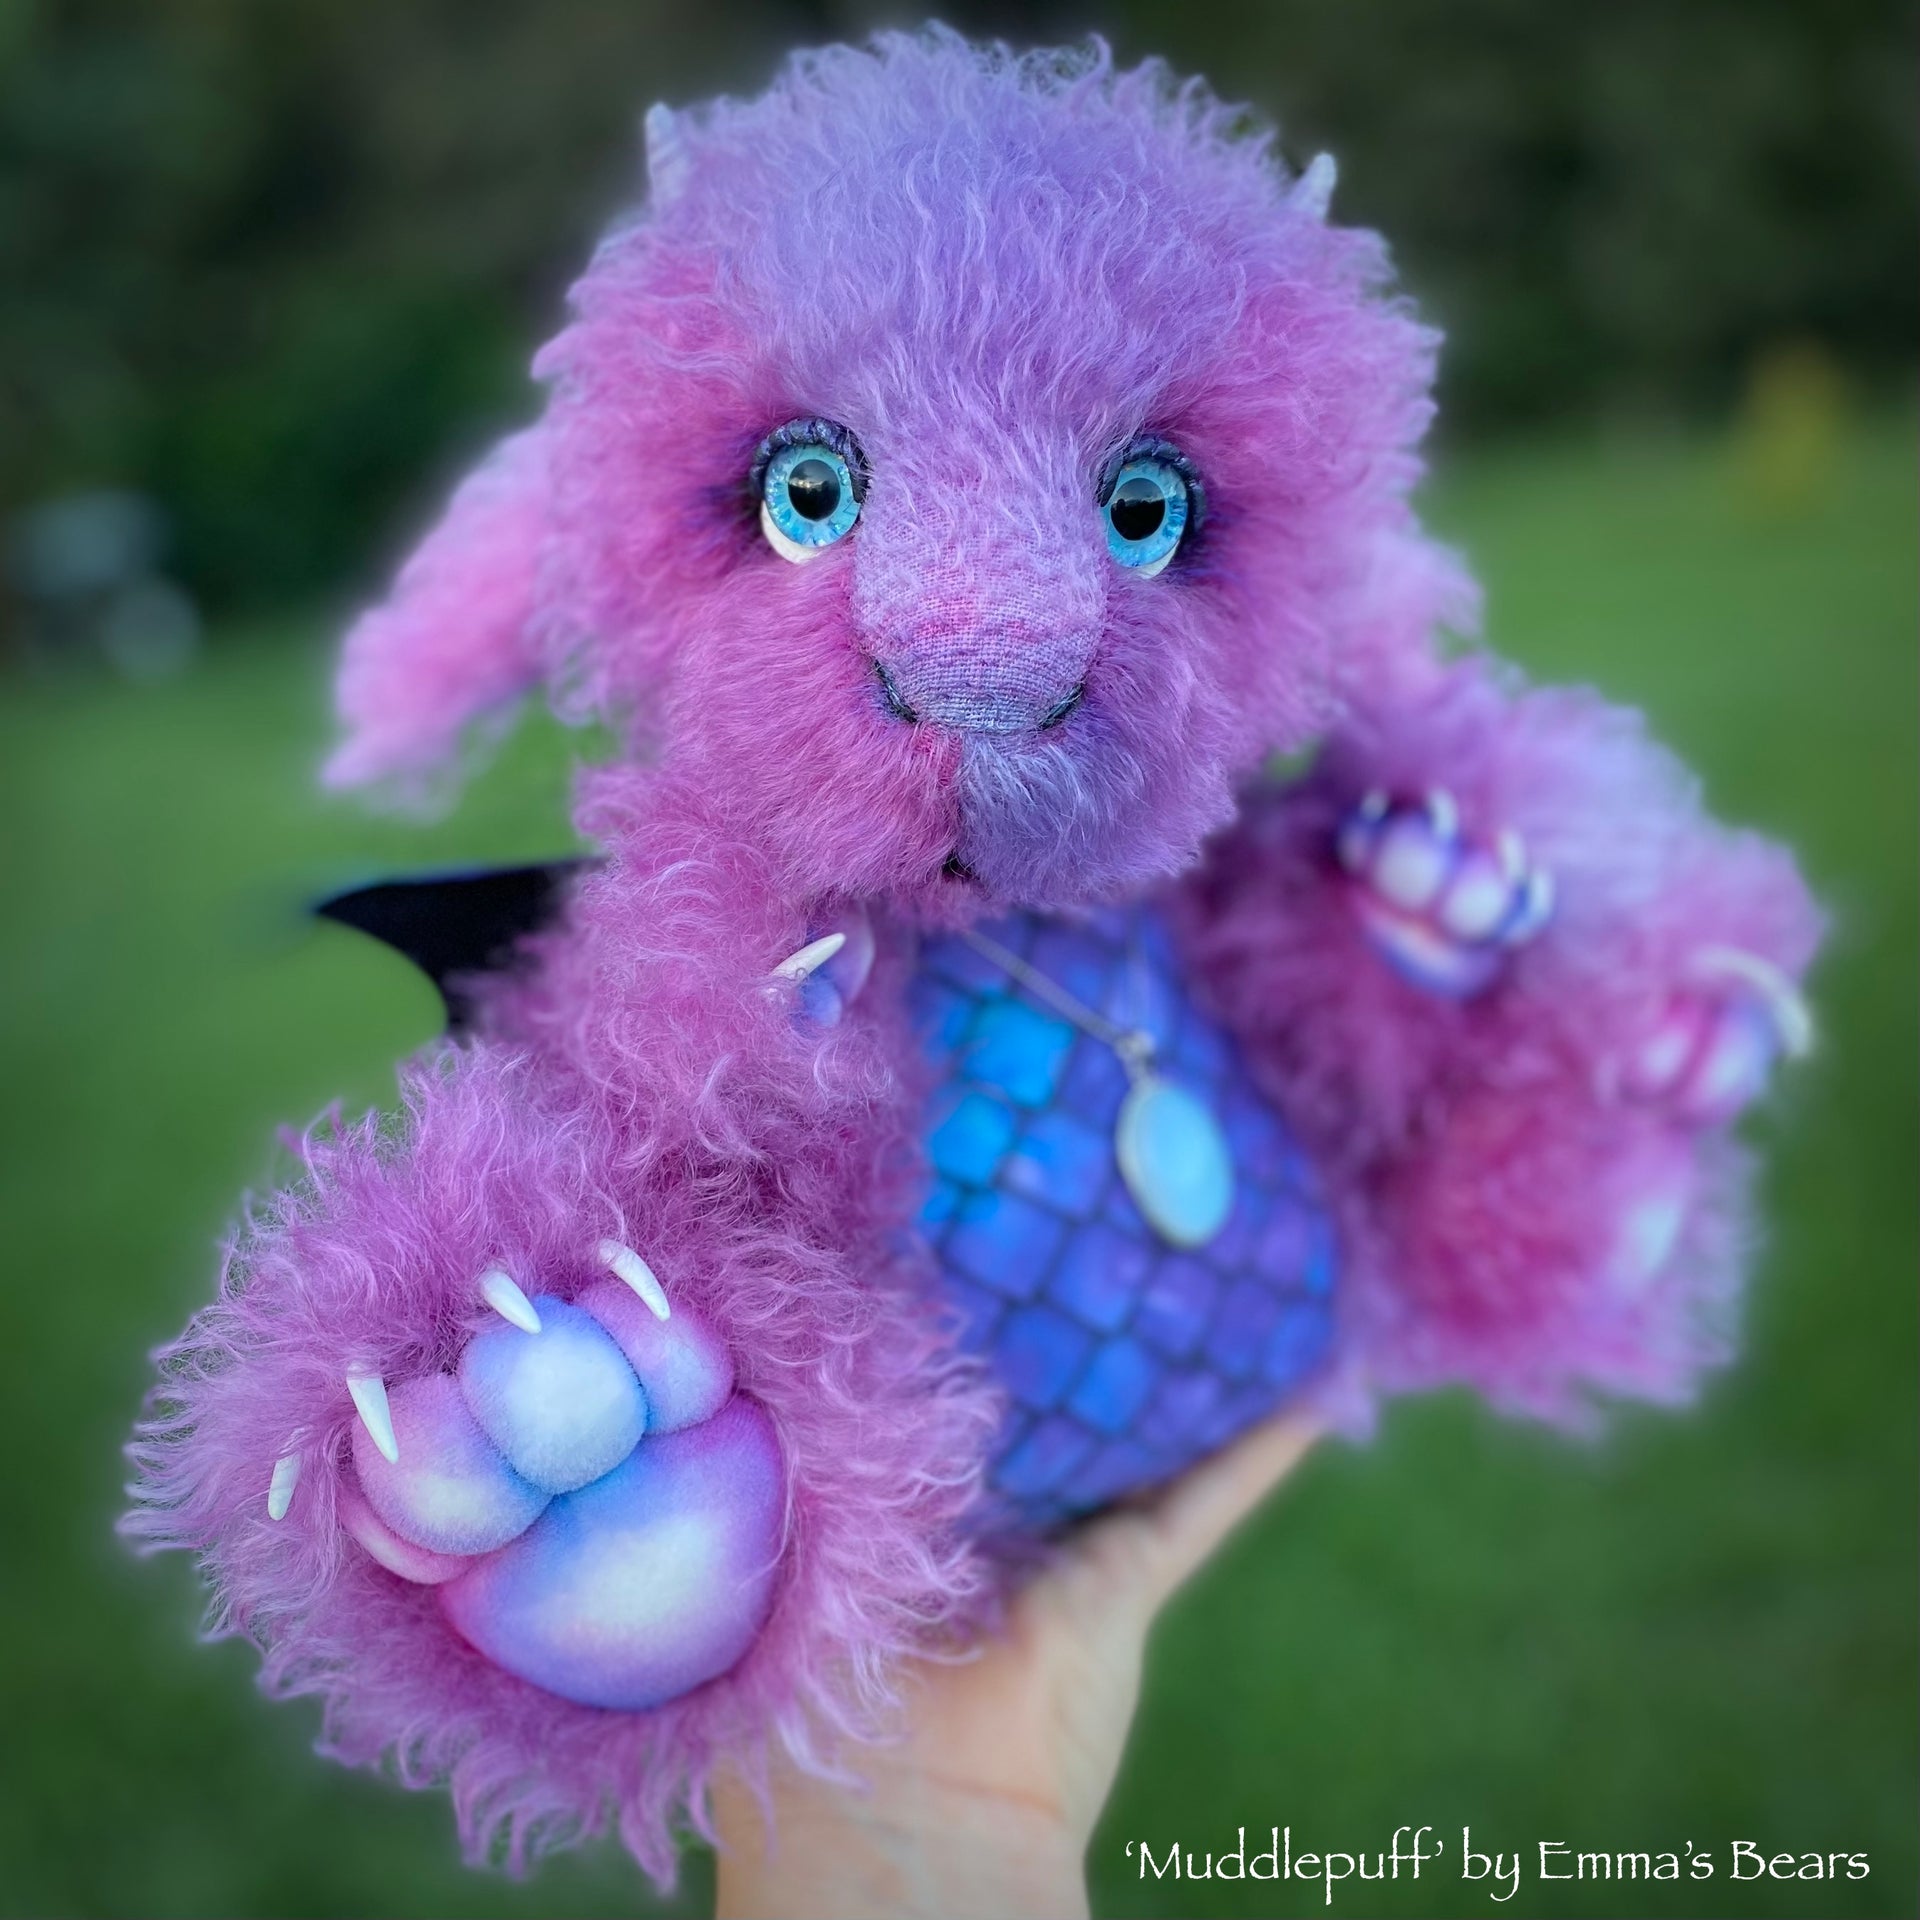 Muddlepuff - 15" hand-dyed curlylocks mohair Artist Baby Dragon by Emmas Bears - OOAK